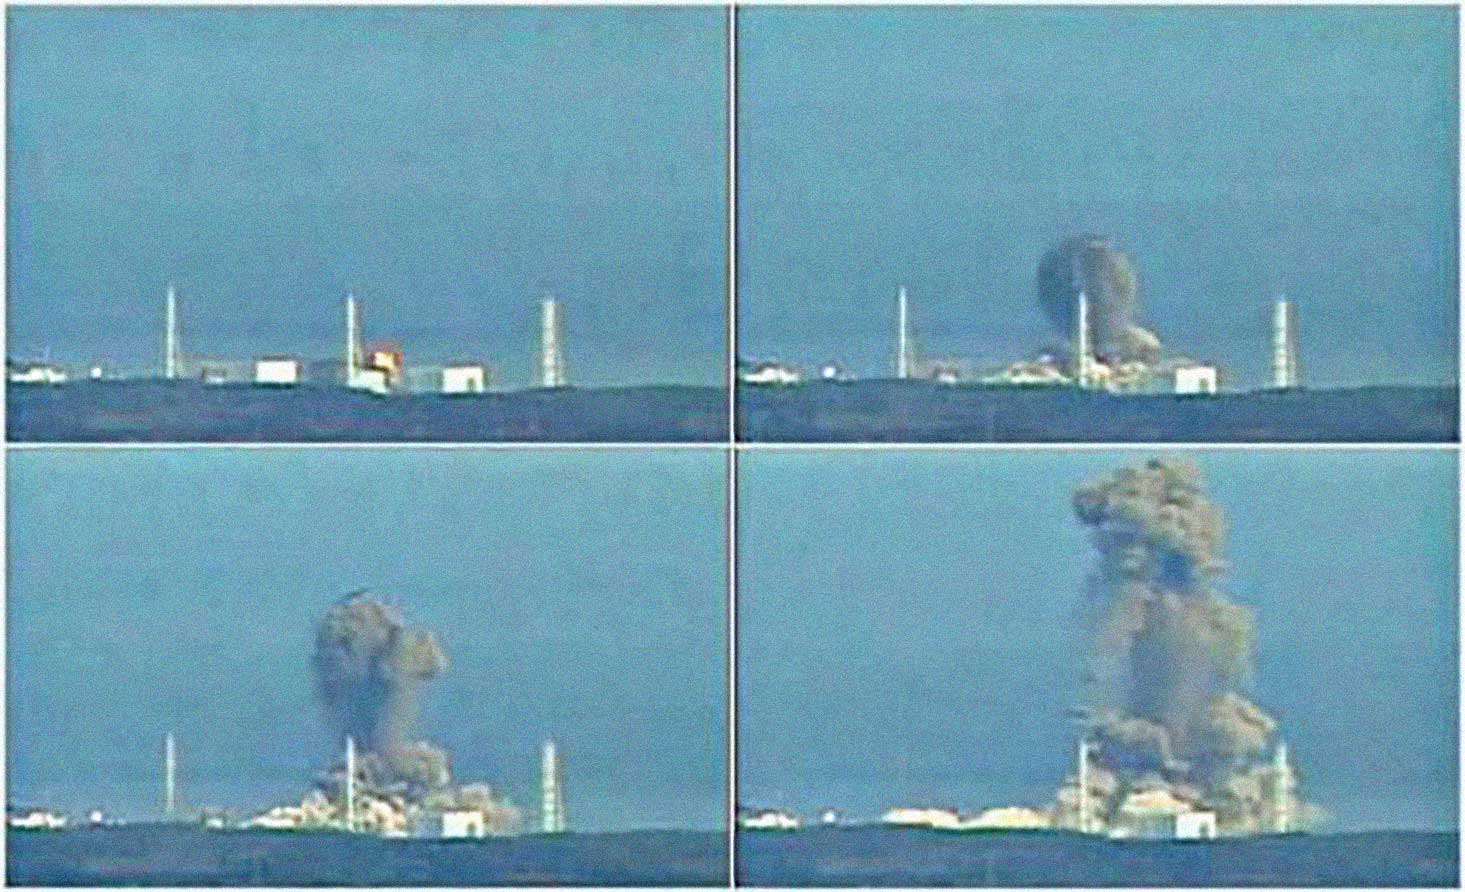 Fukushima esplosione